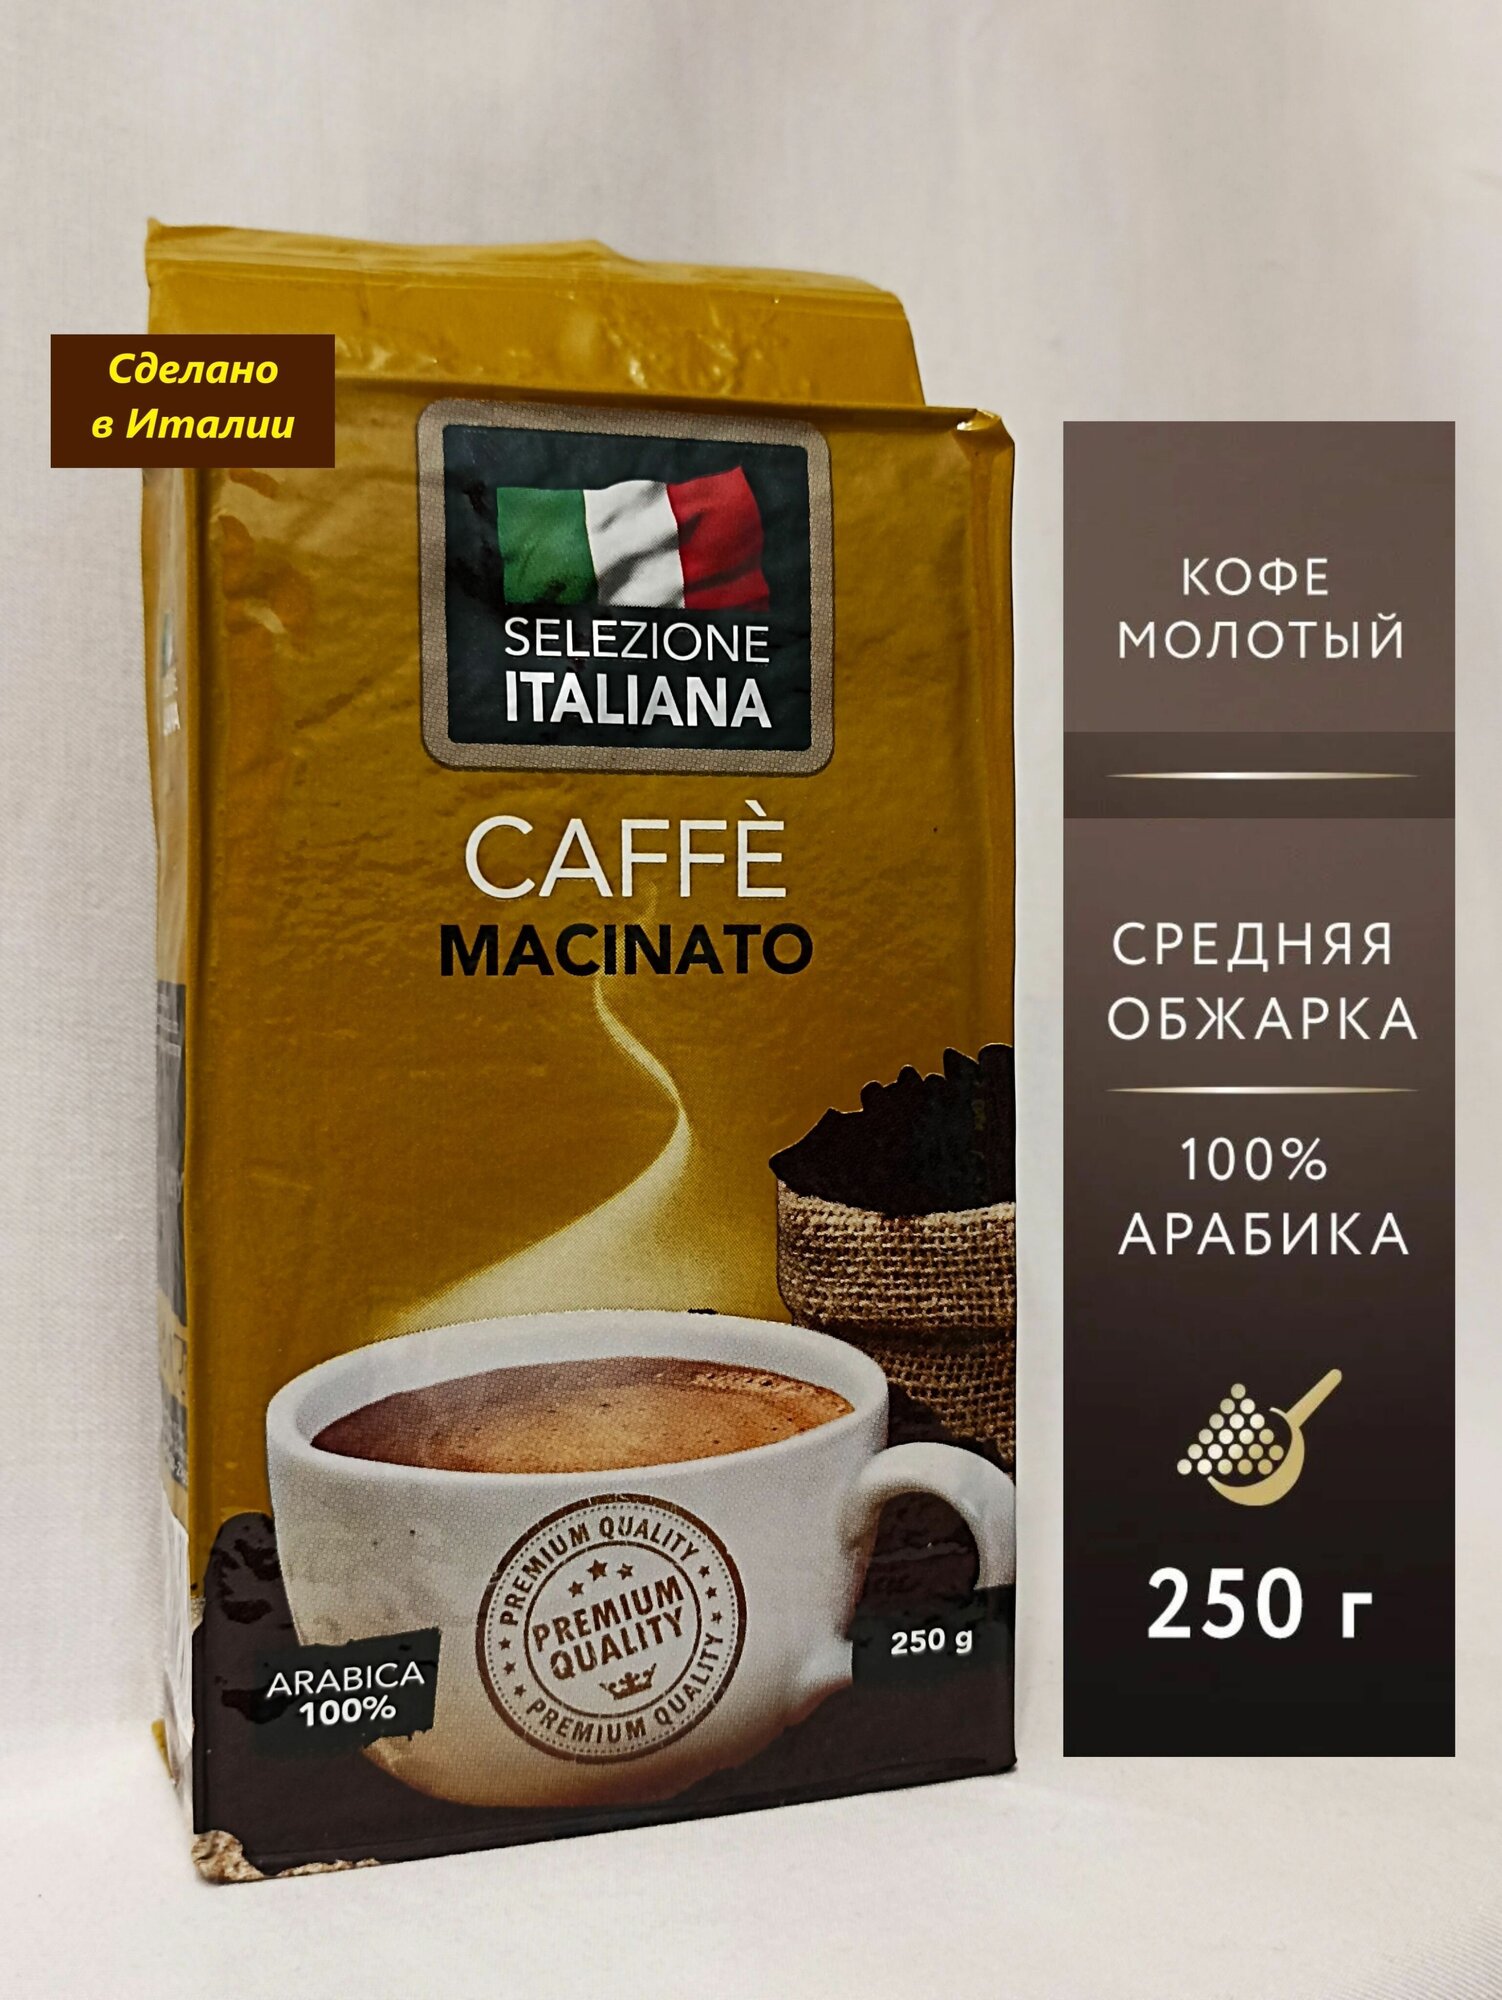 Кофе молотый 250 г Арабика 100% (Италия) Selezione ITALIANA CAFFE MACINATO, кофе натуральный жареный молотый 250 грамм - фотография № 1